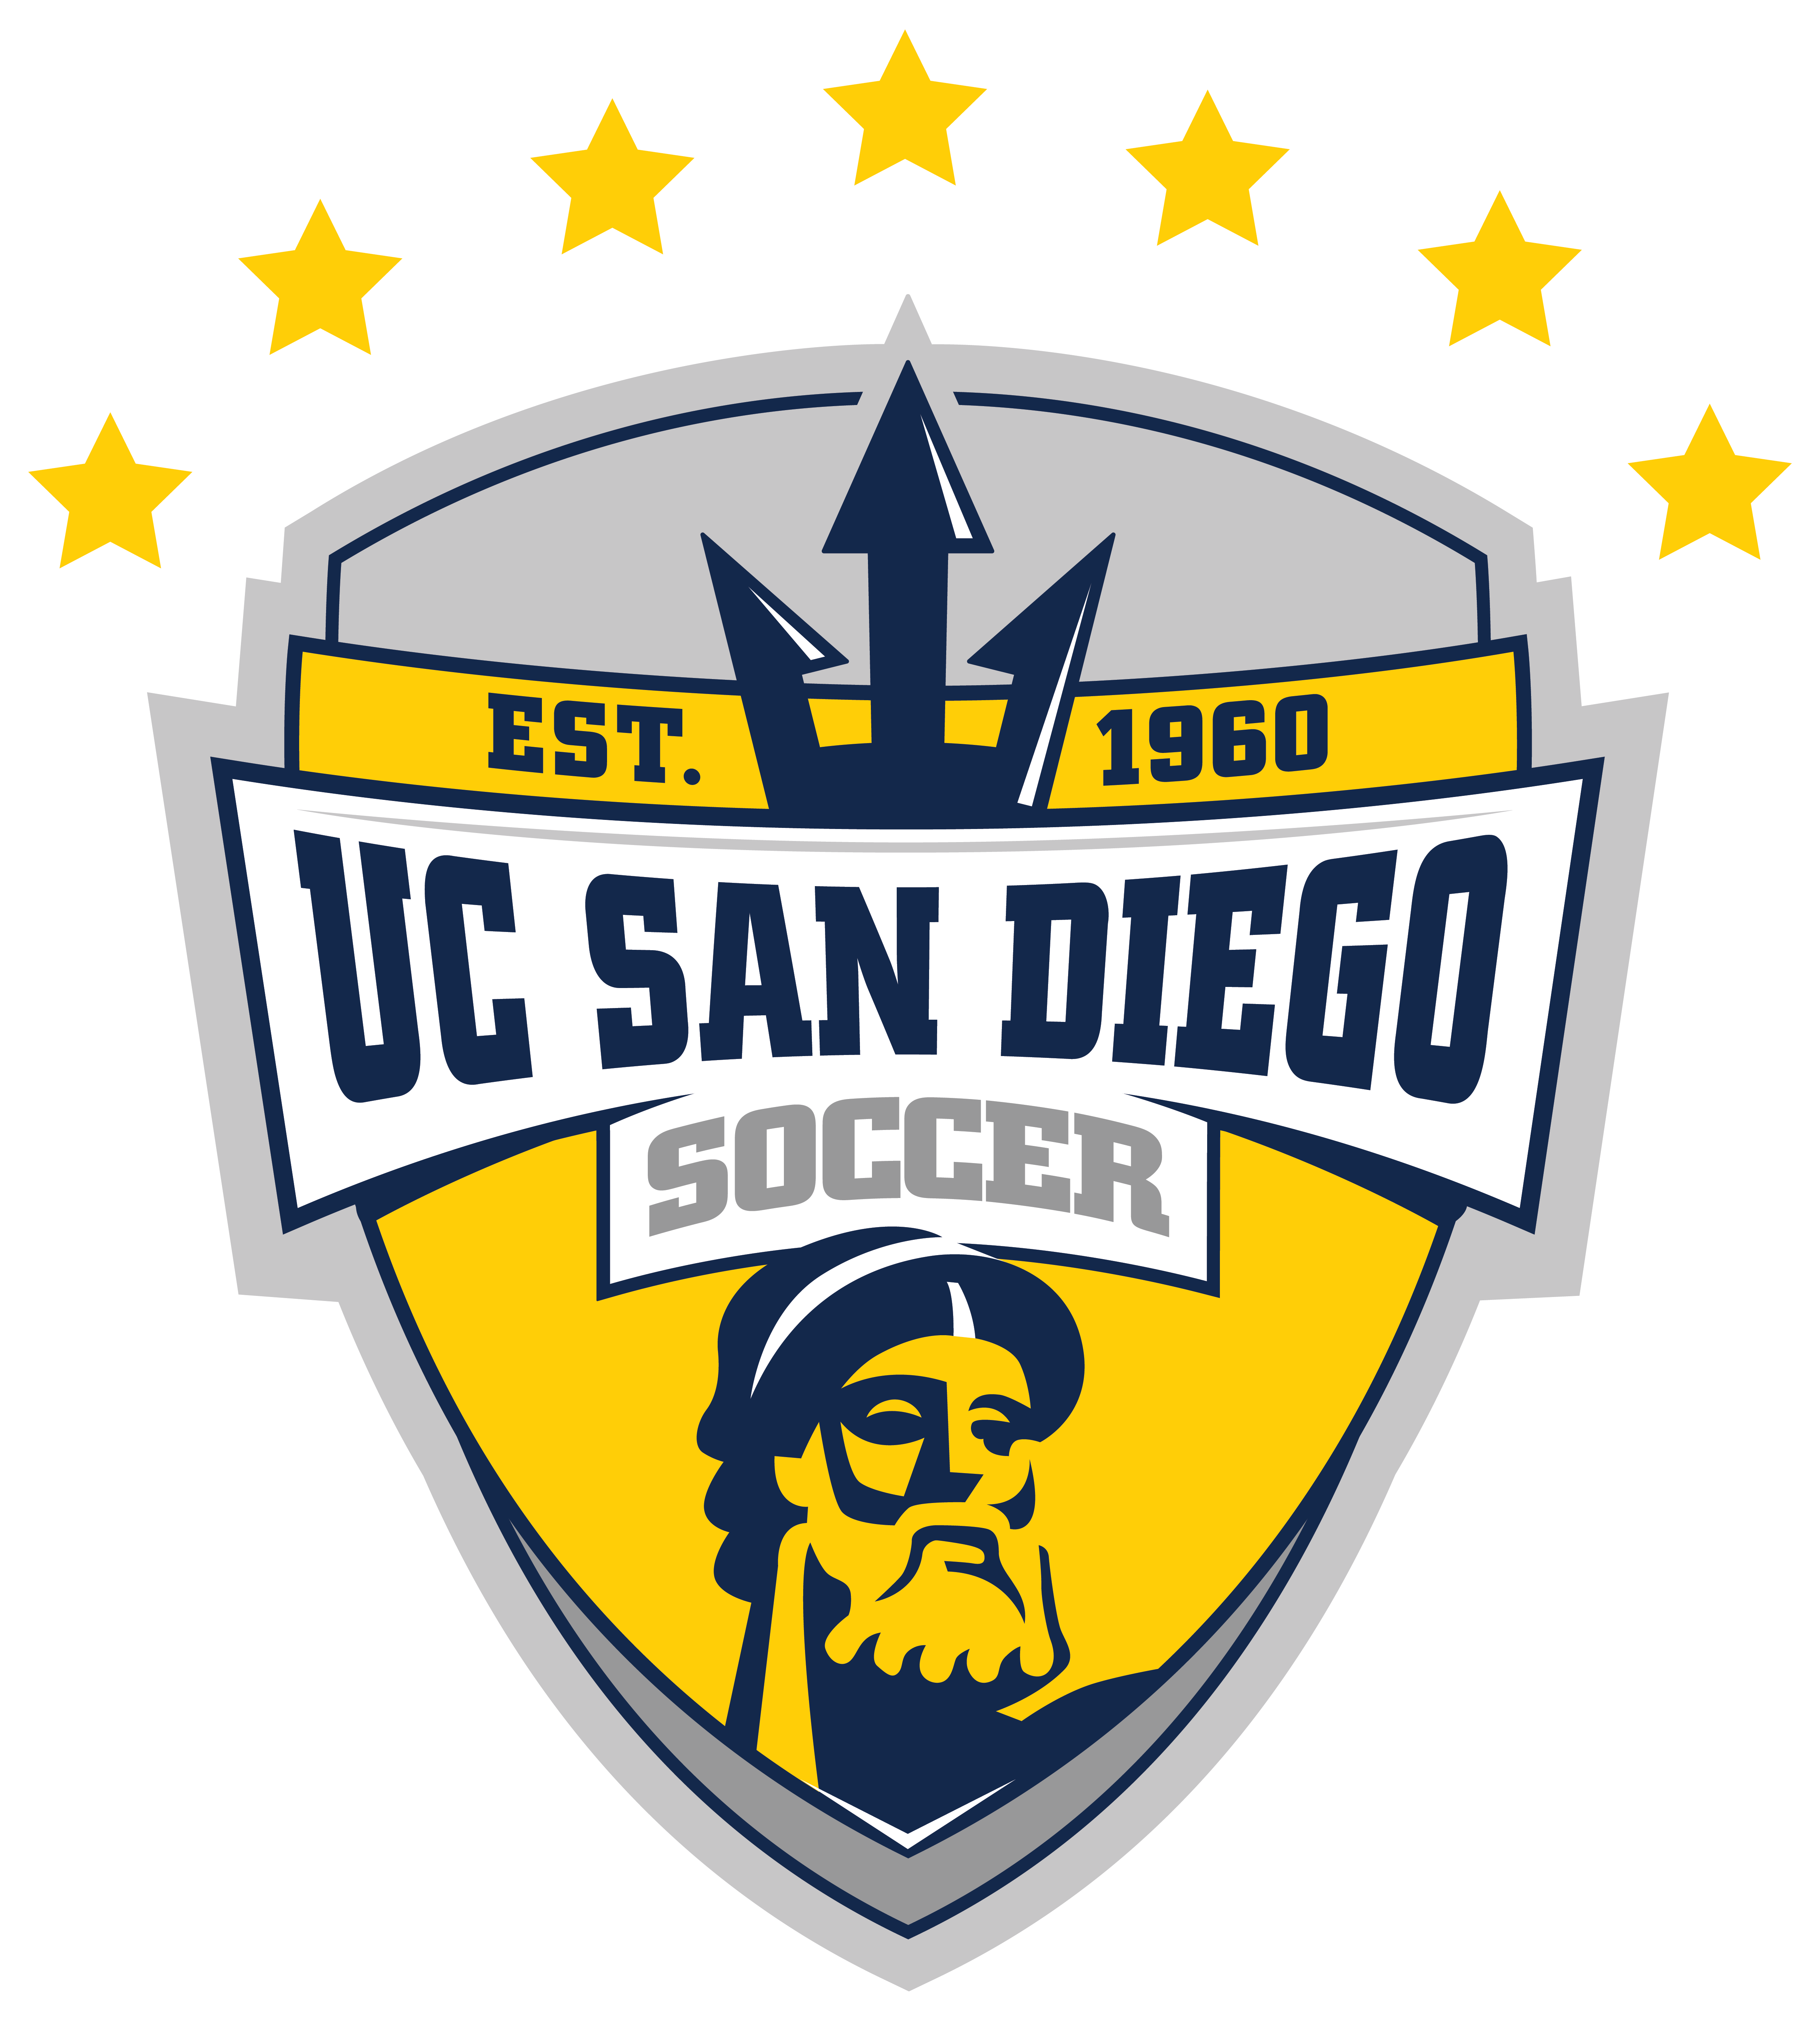 UCSD Soccer